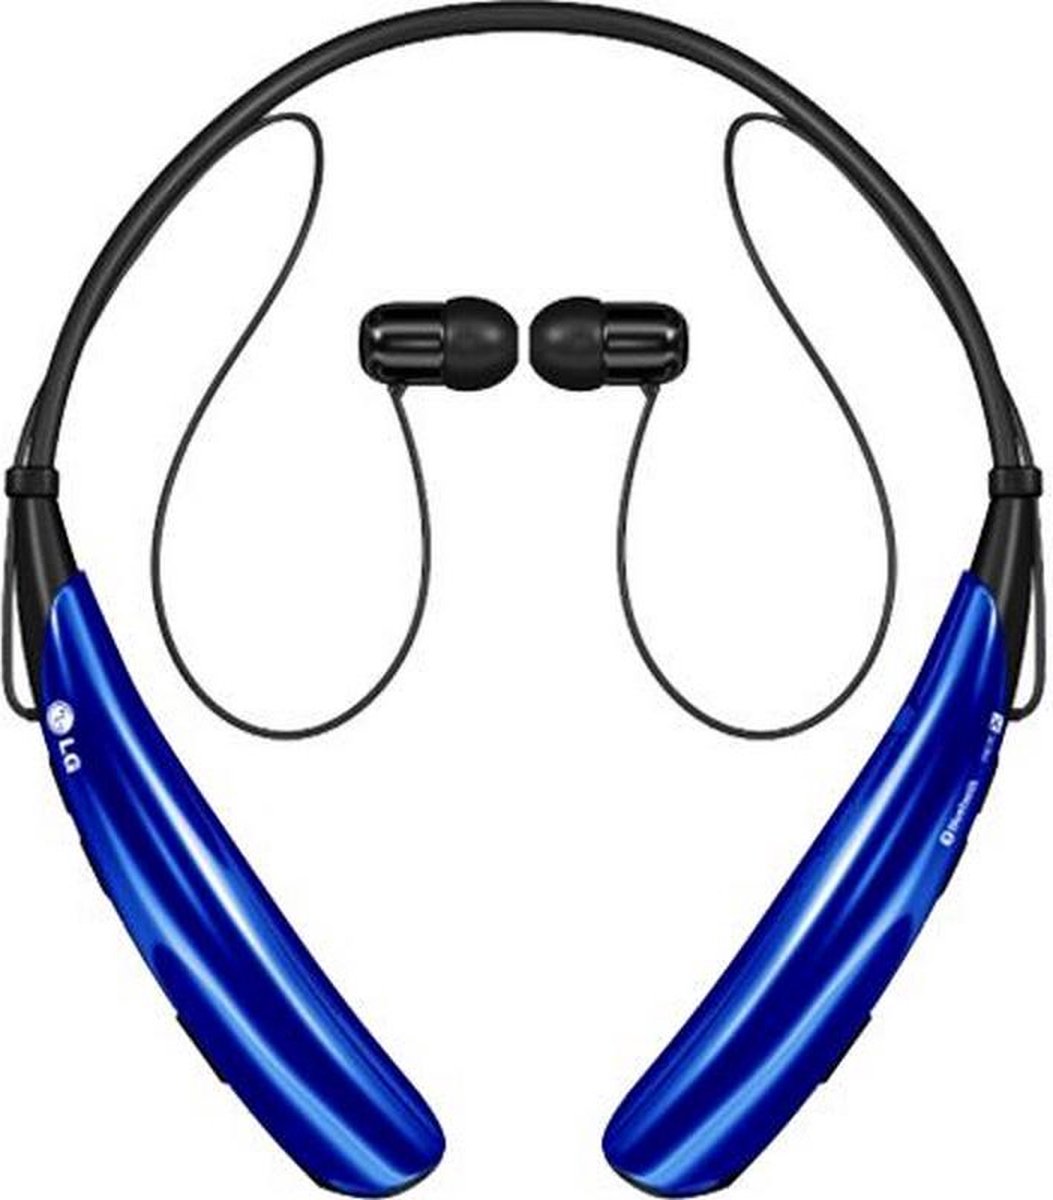 LG Bluetooth Stereo Headset HBS-750 Tone Pro - Blauw